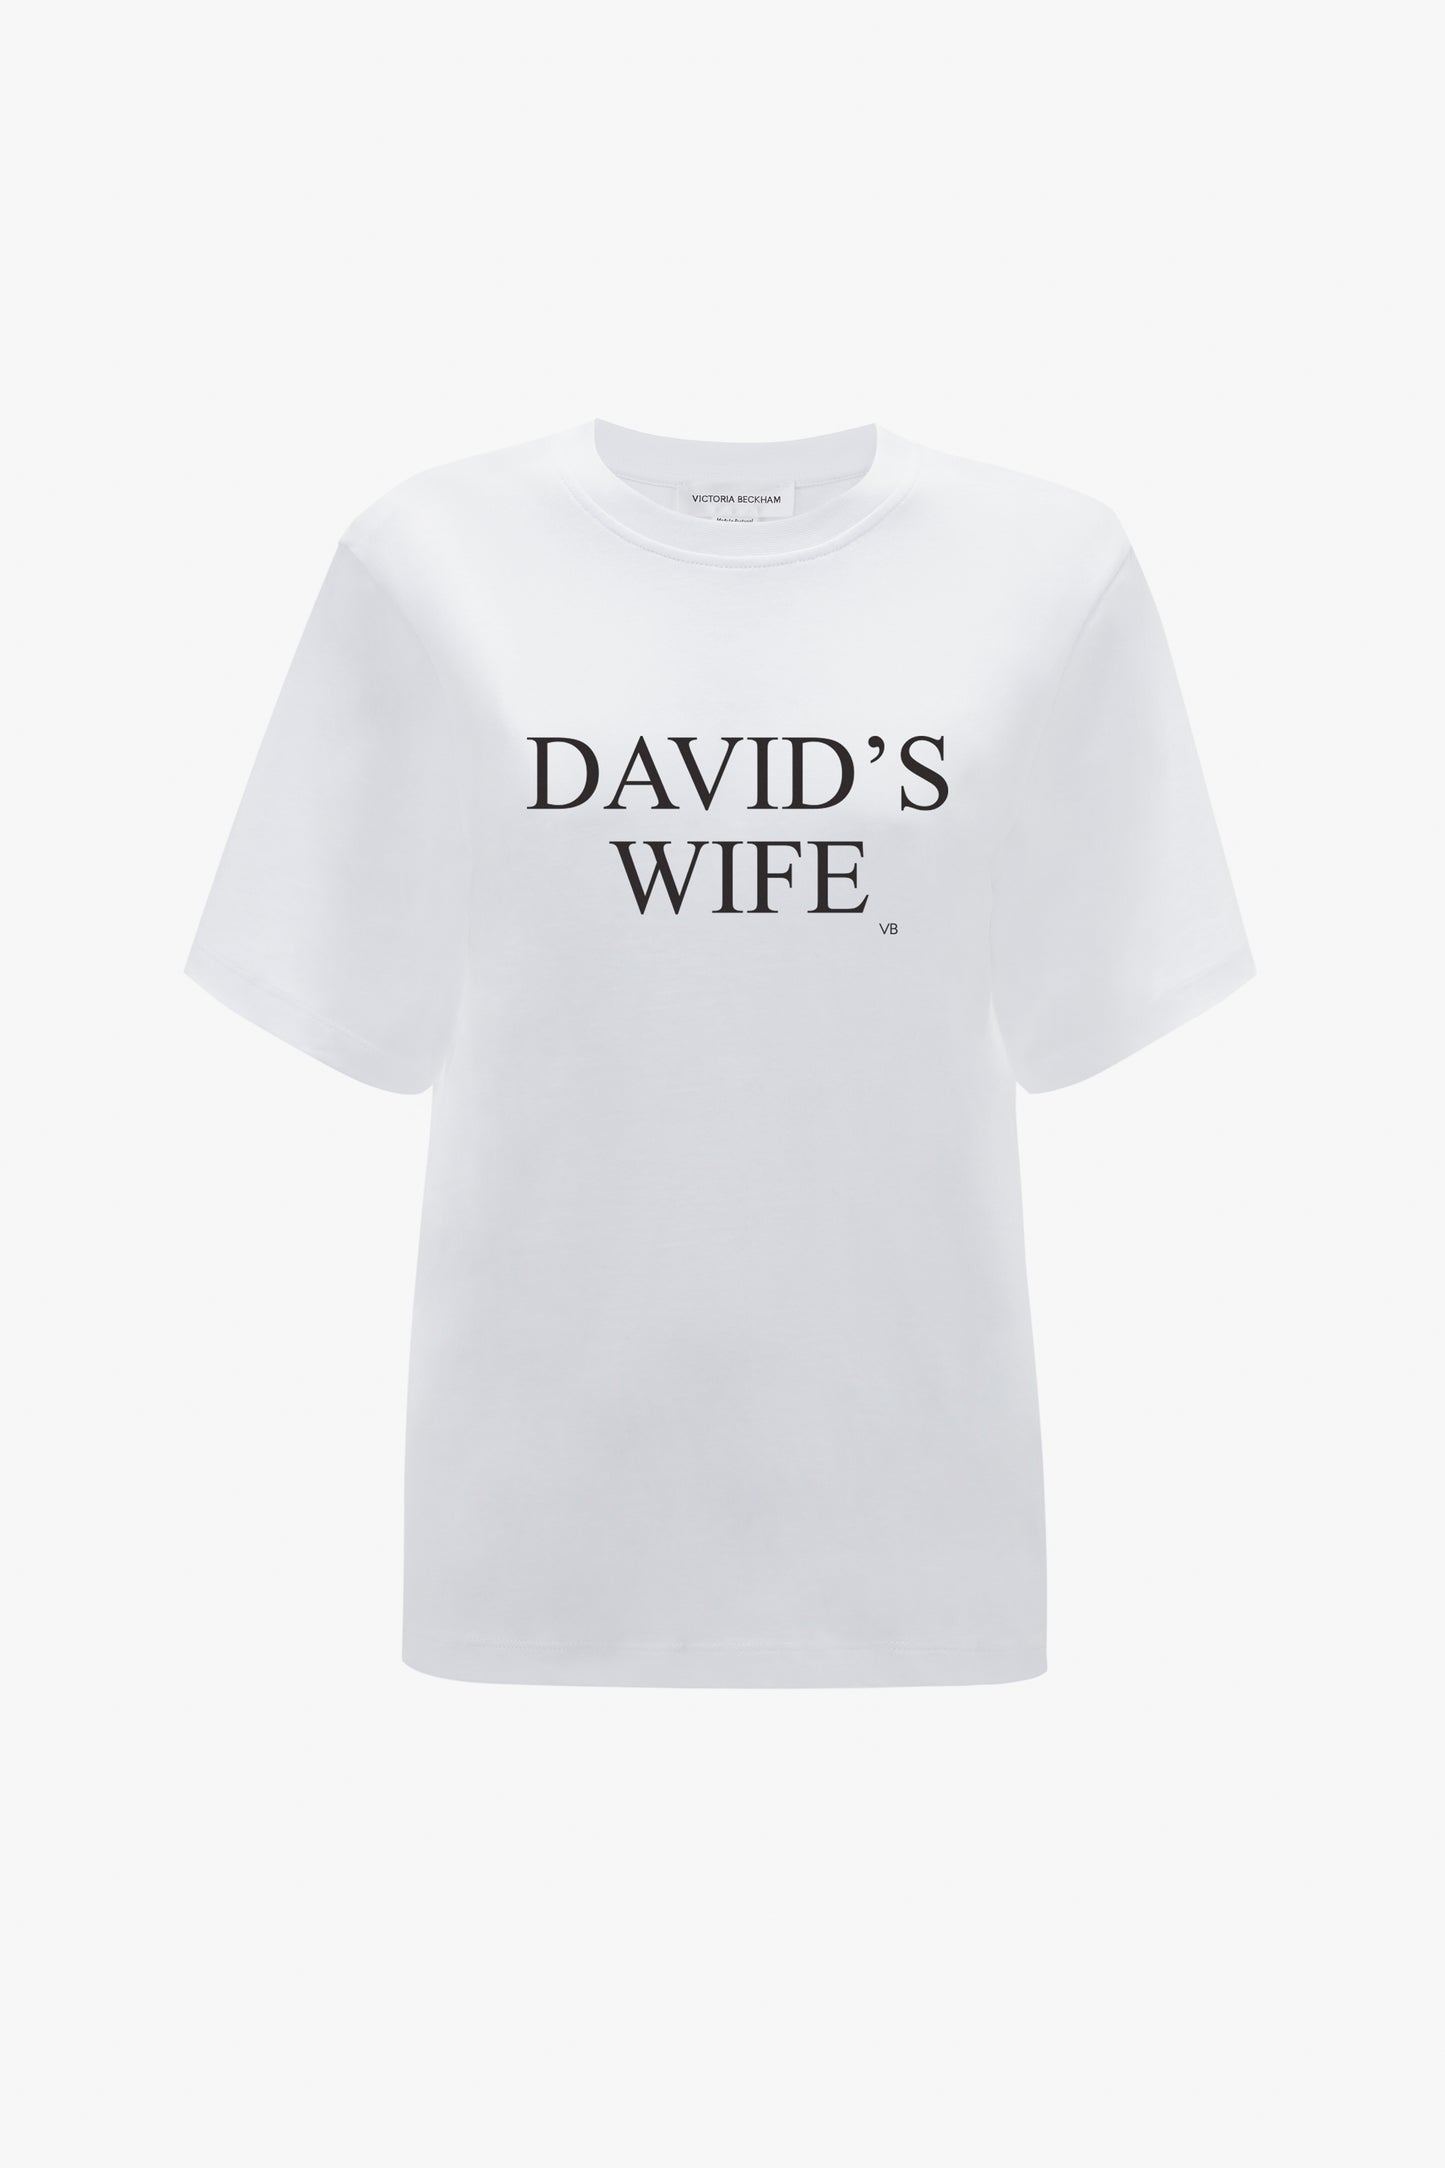 White 'David's Wife' Slogan T-Shirt In White by Victoria Beckham